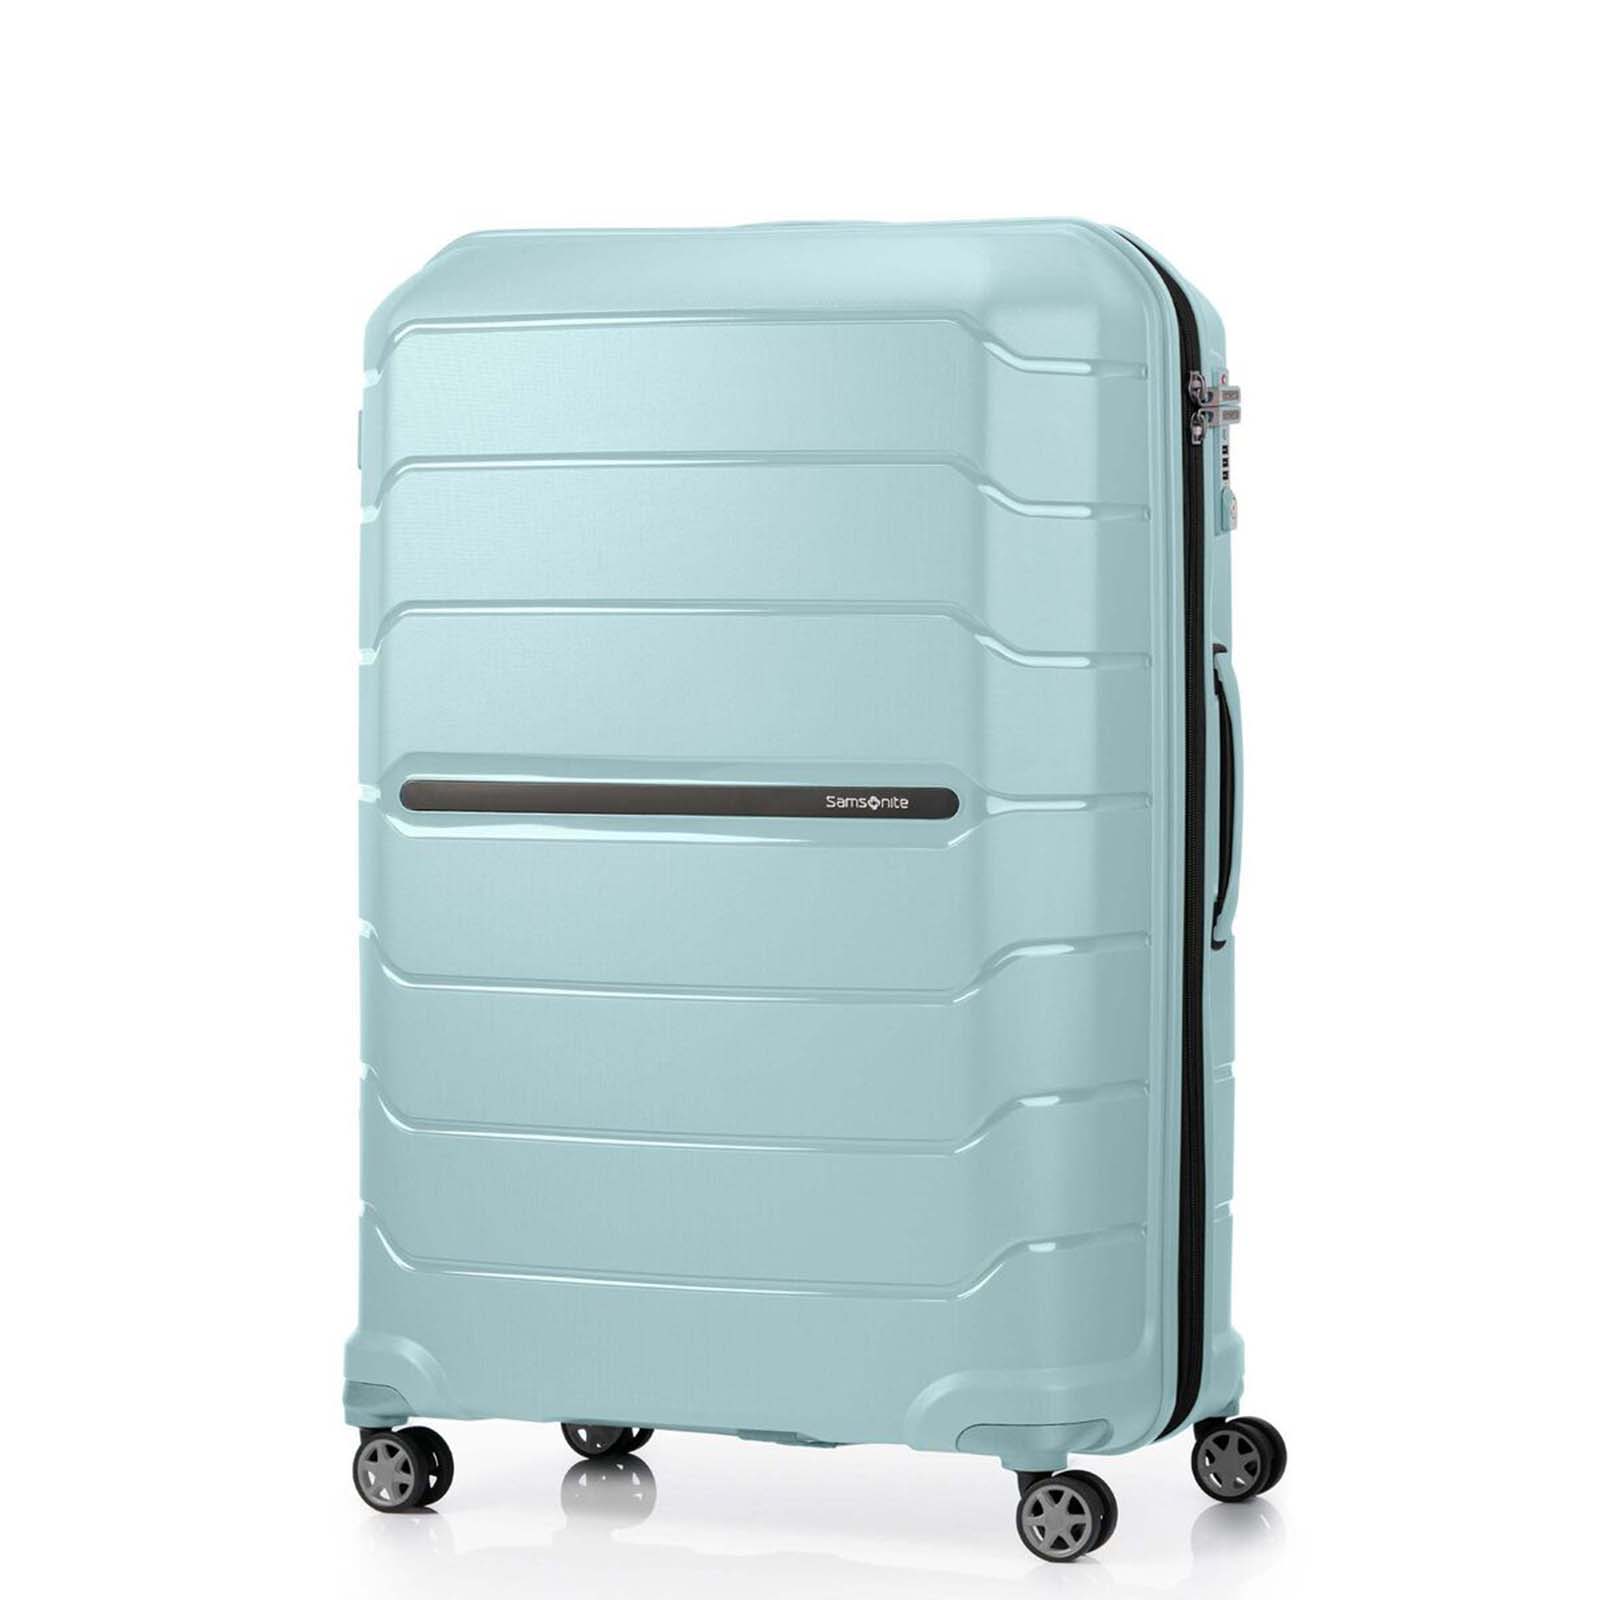 Samsonite-Oc2lite-81cm-Suitcase-Lagoon-Blue-Front-Angle